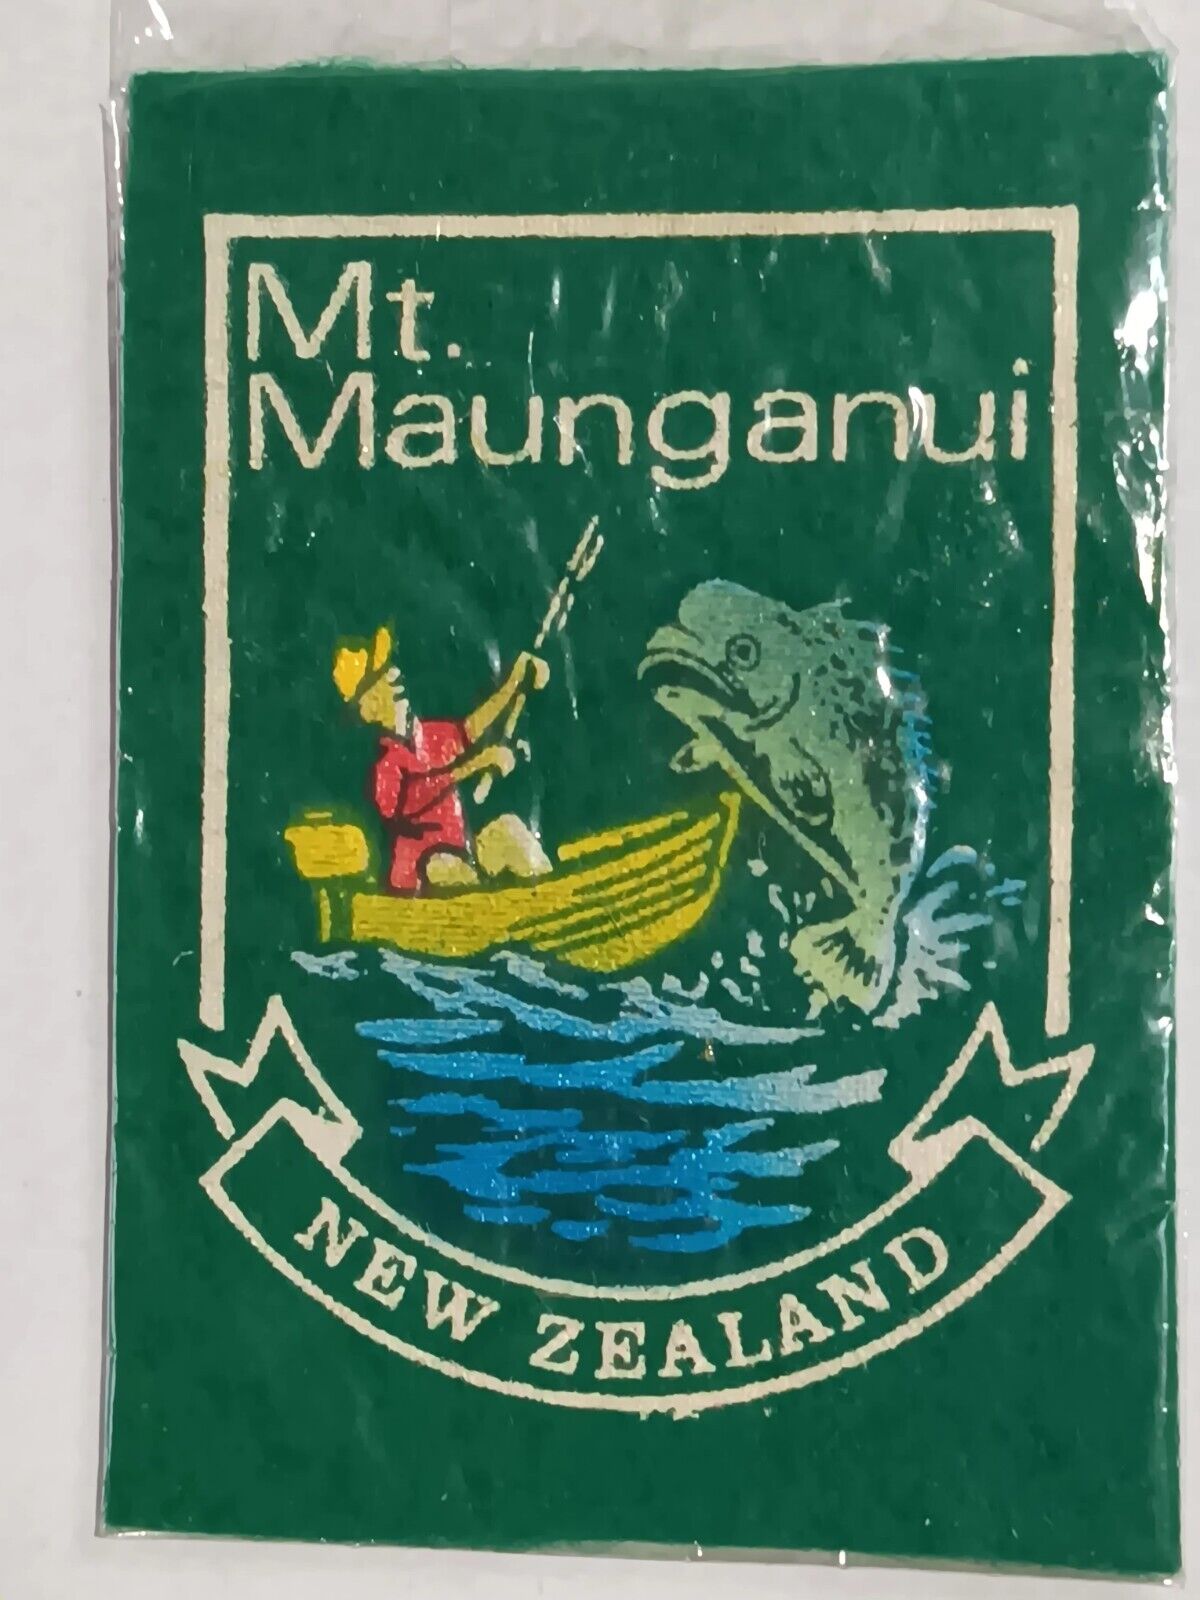 Mt. Maunganui New Zealand Vintage Printed Felt Square Patch Travel Souvenir New 